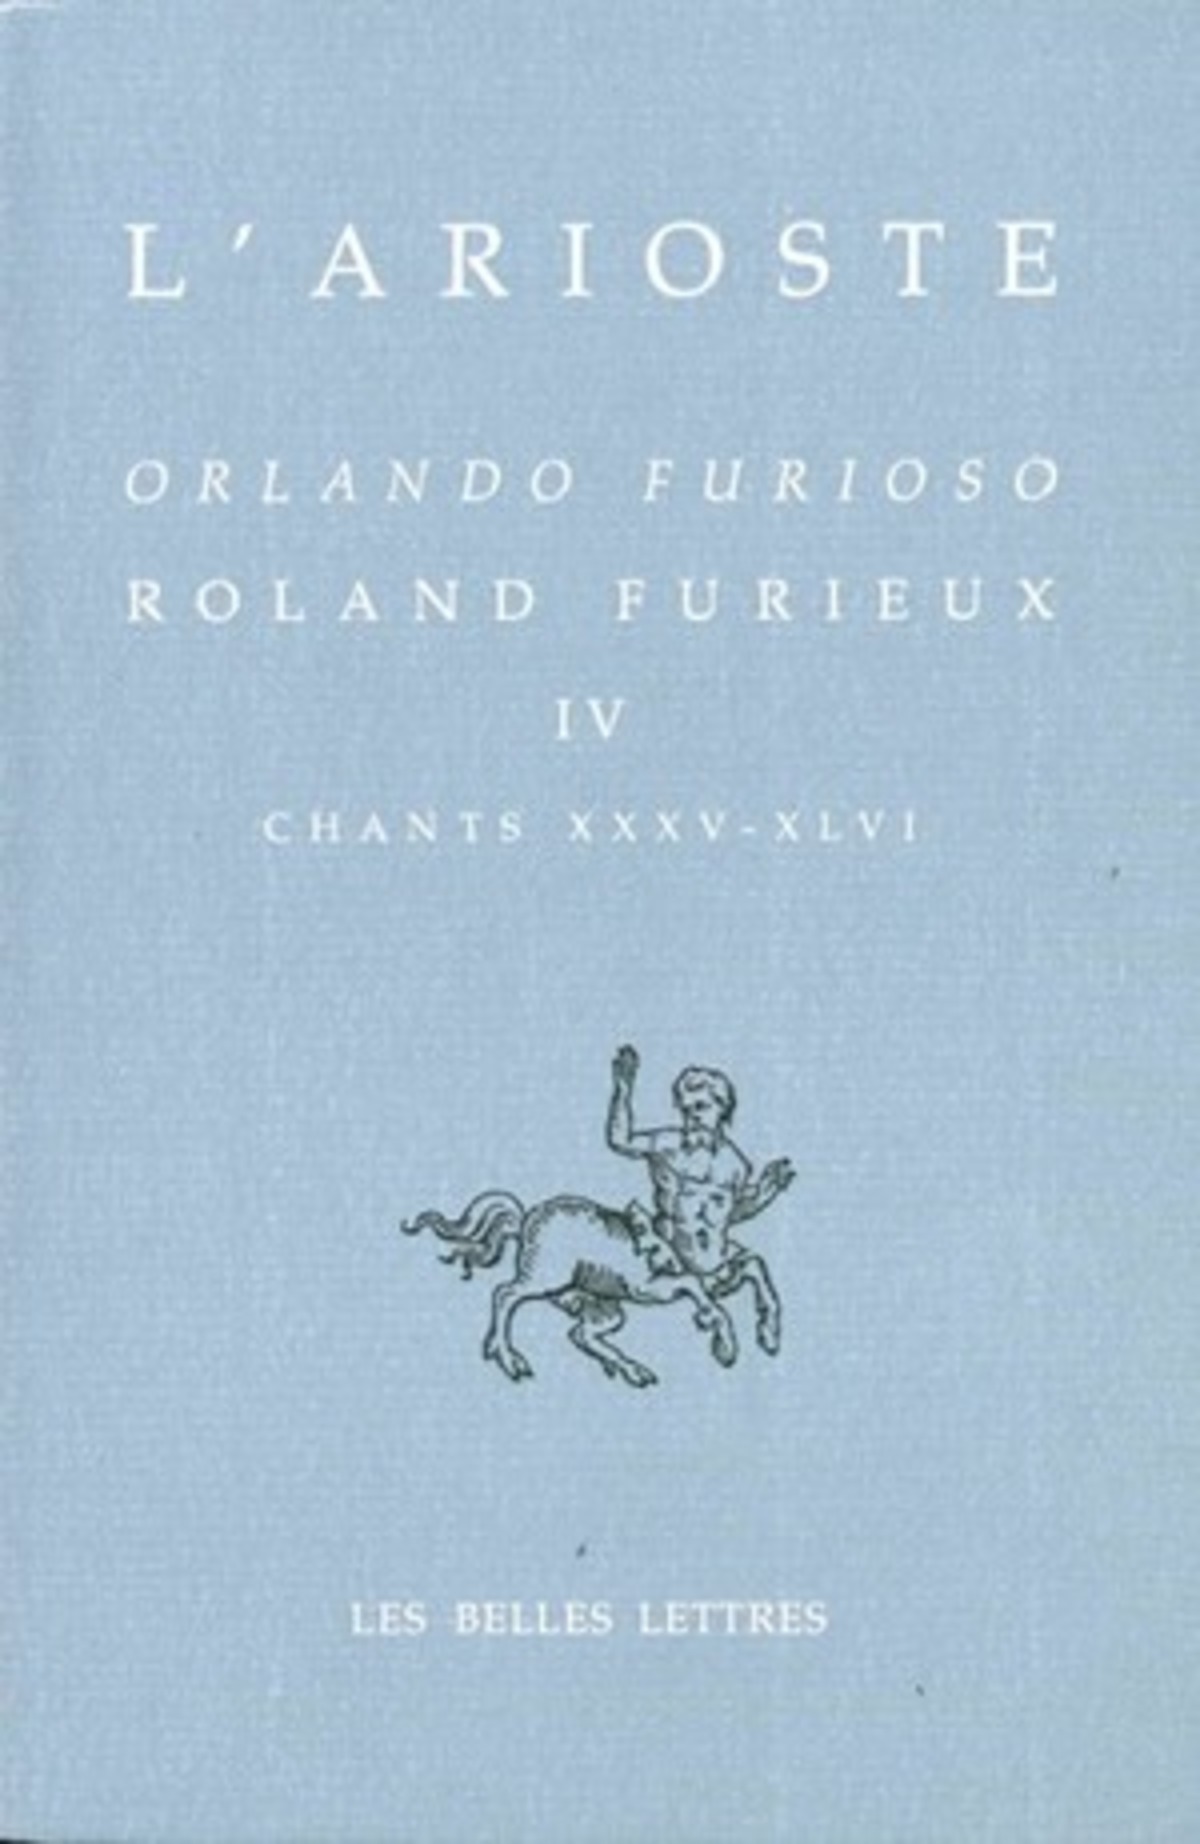 Orlando furioso - Roland Furieux. Tome IV, Chants XXXV-XLVI